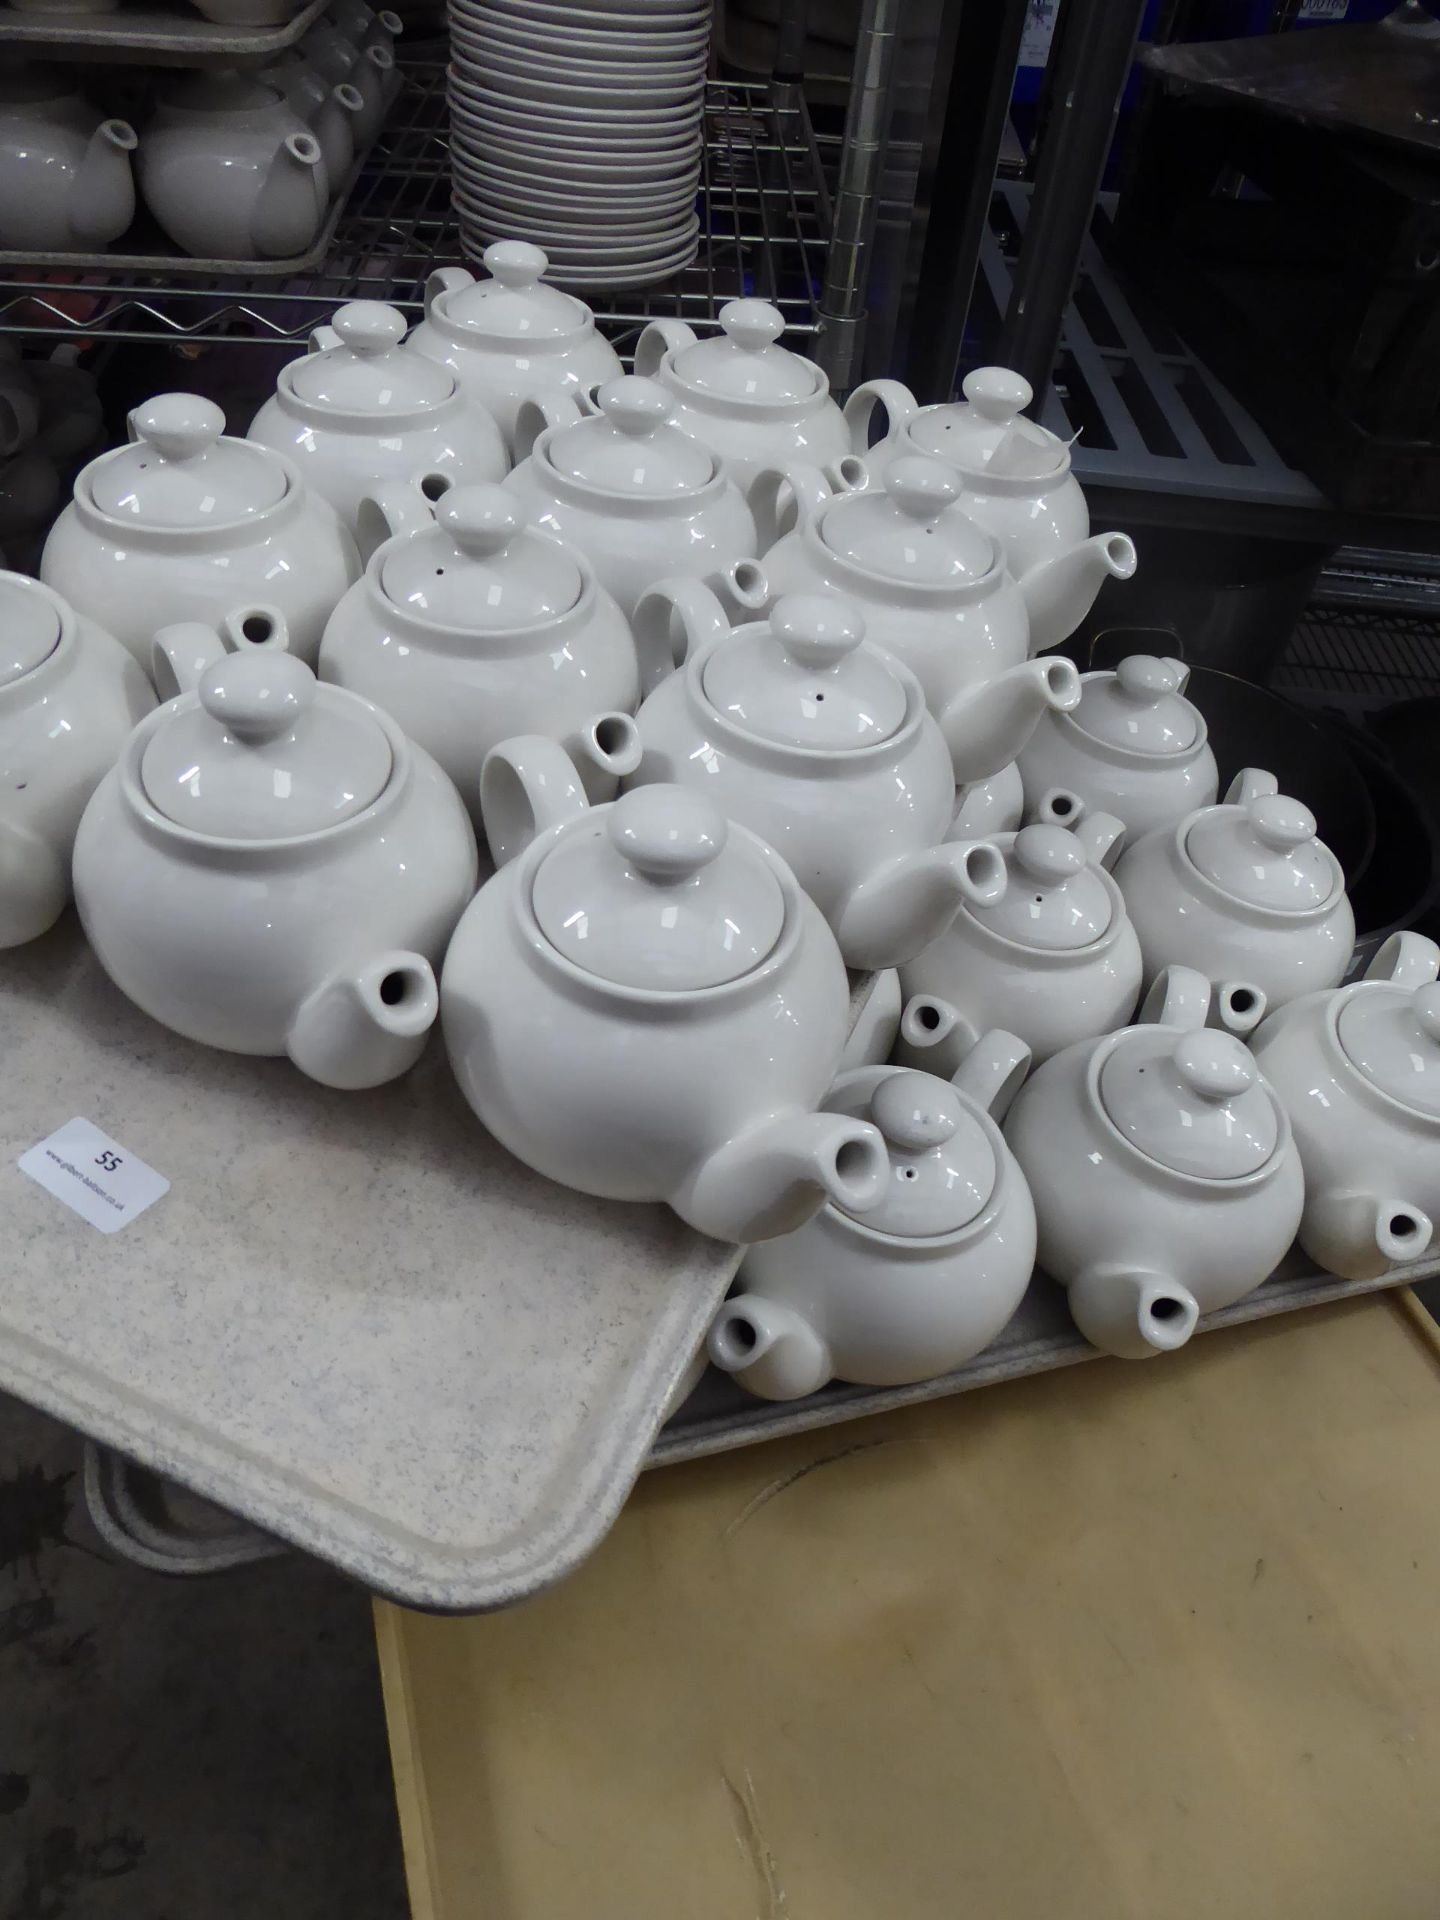 * 31 x white tea pots